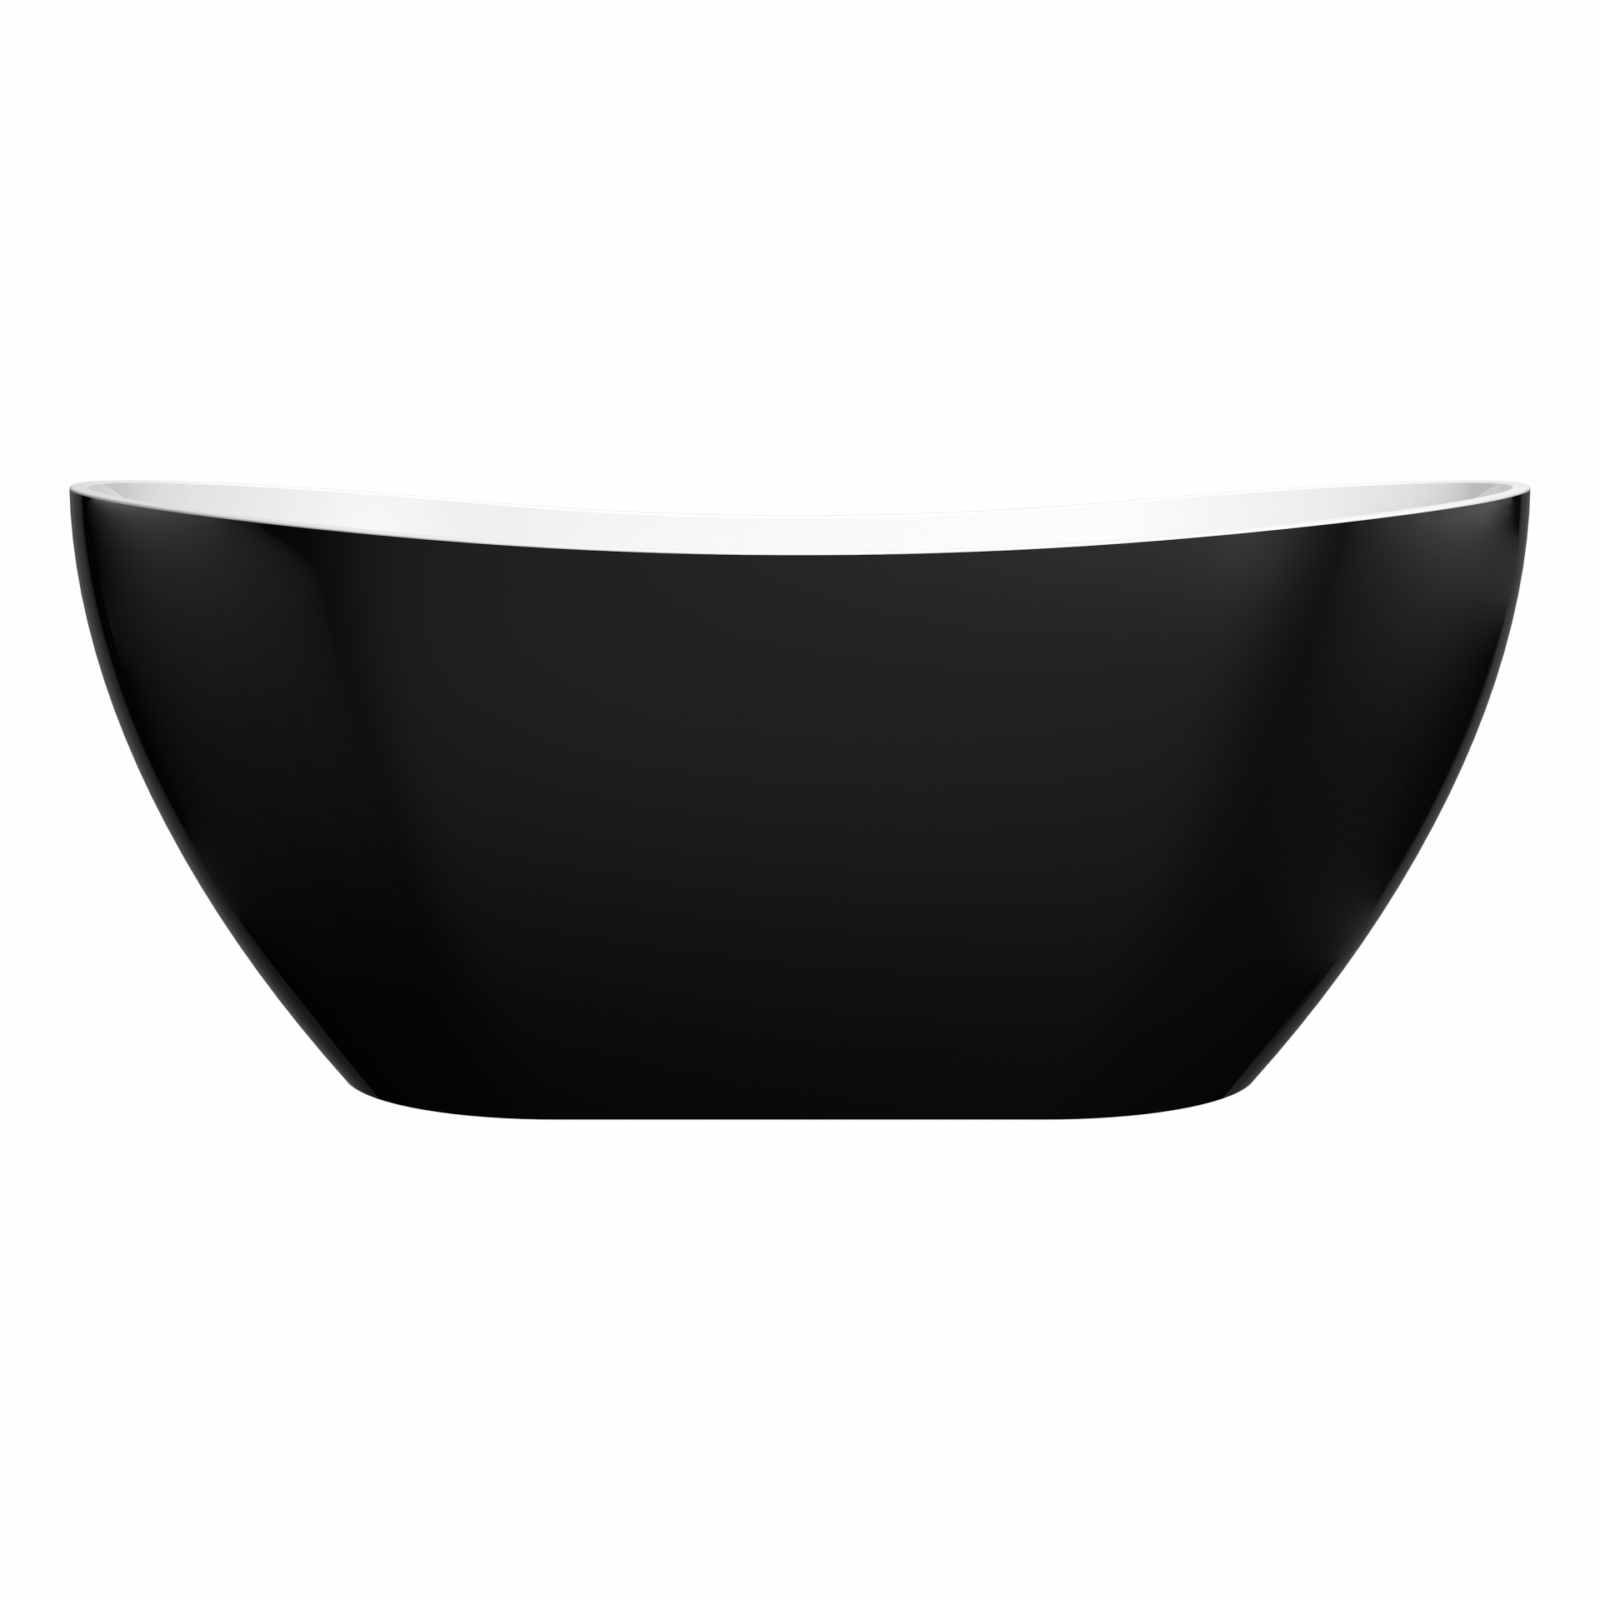 EVIE 1500mm Black Oval Freestanding Bathtub